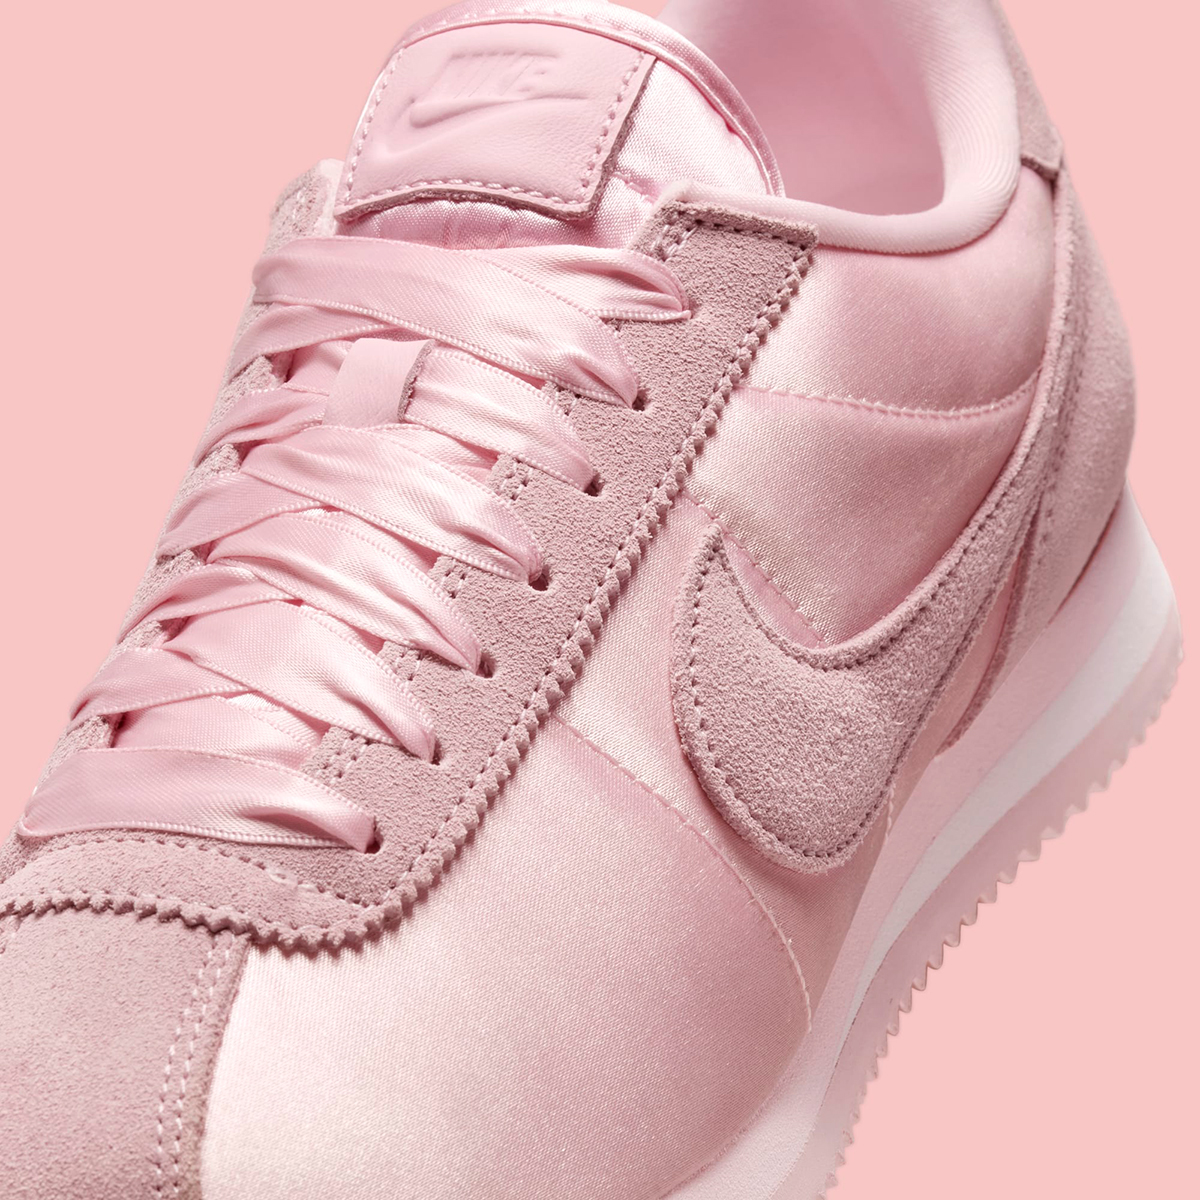 Nike Cortez Womens Satin Pink Fv5420 600 8